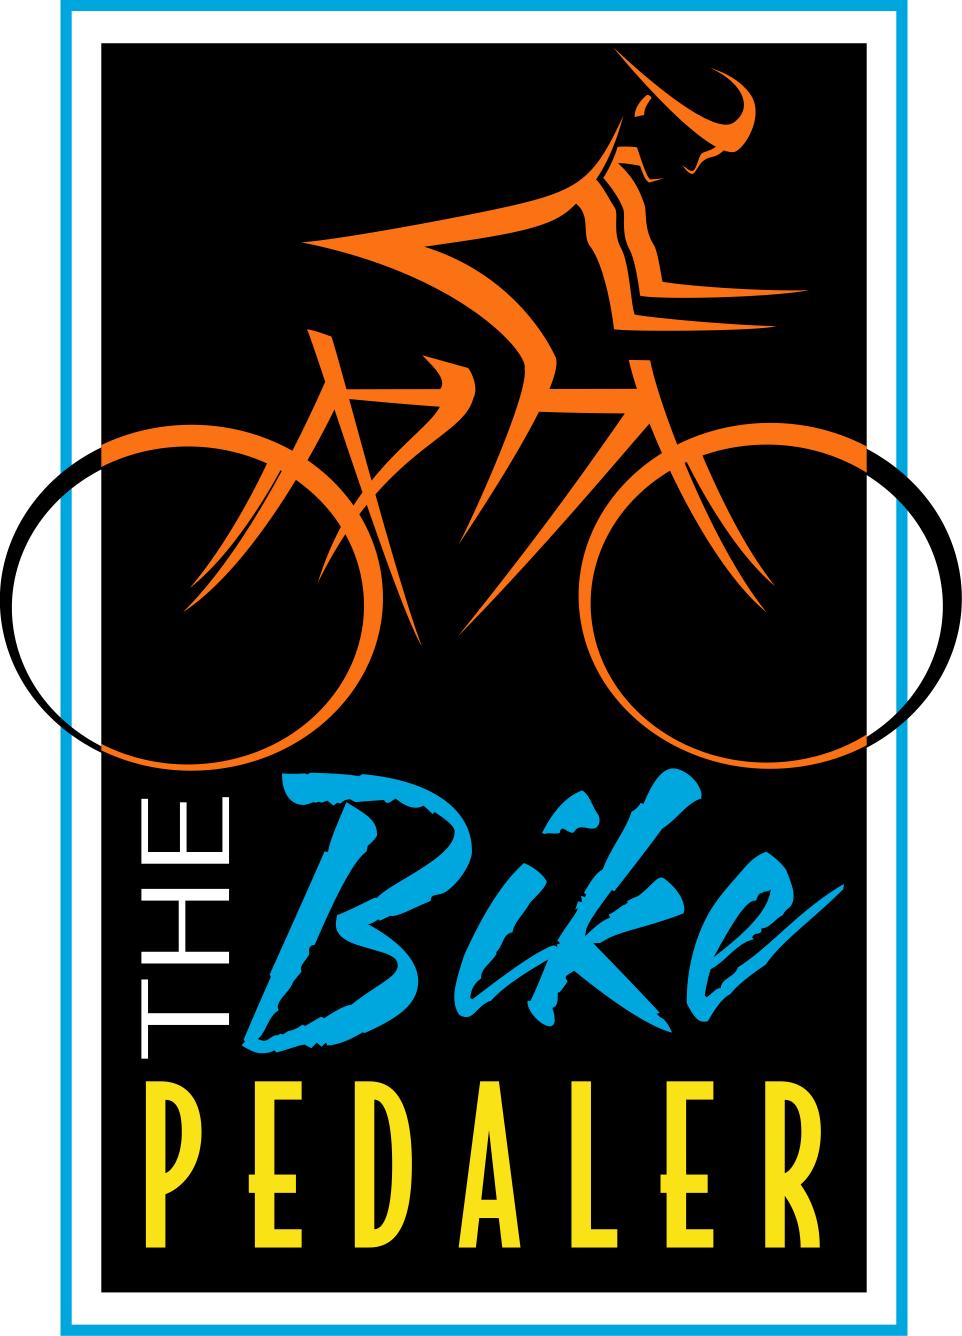 The Bike Pedaler final logo